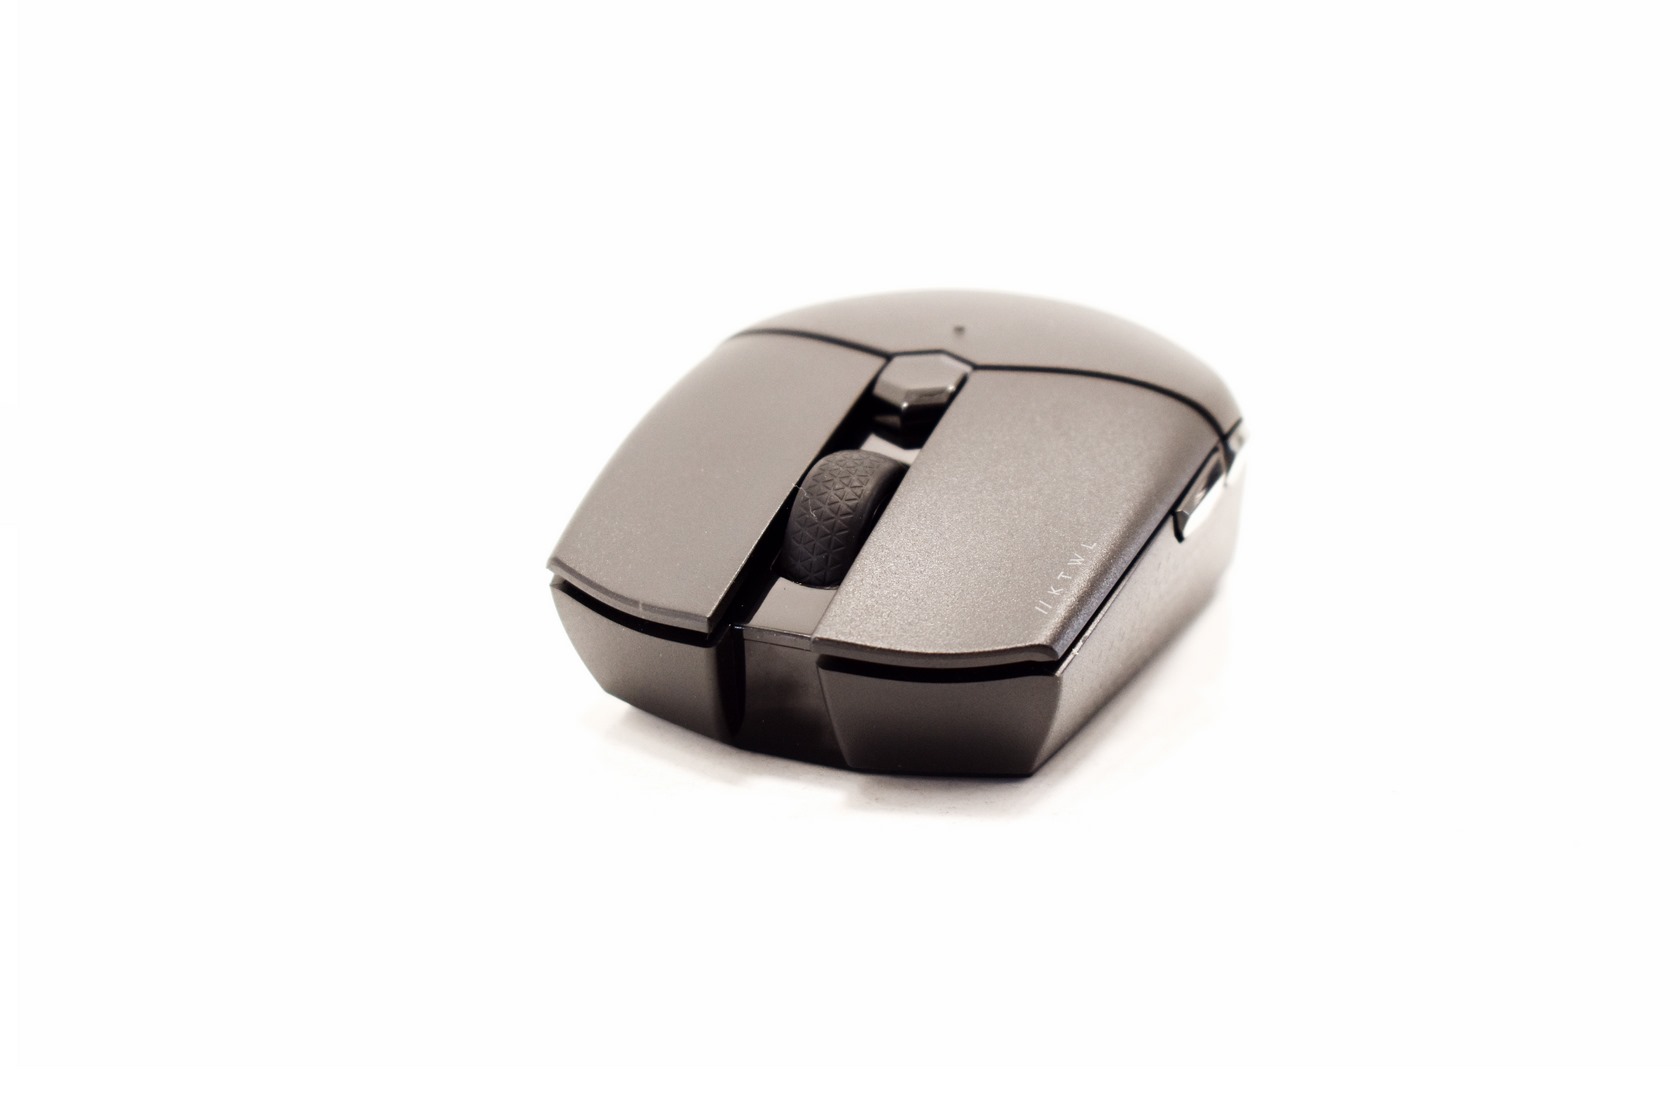 Corsair Katar Pro Wireless Mouse Review